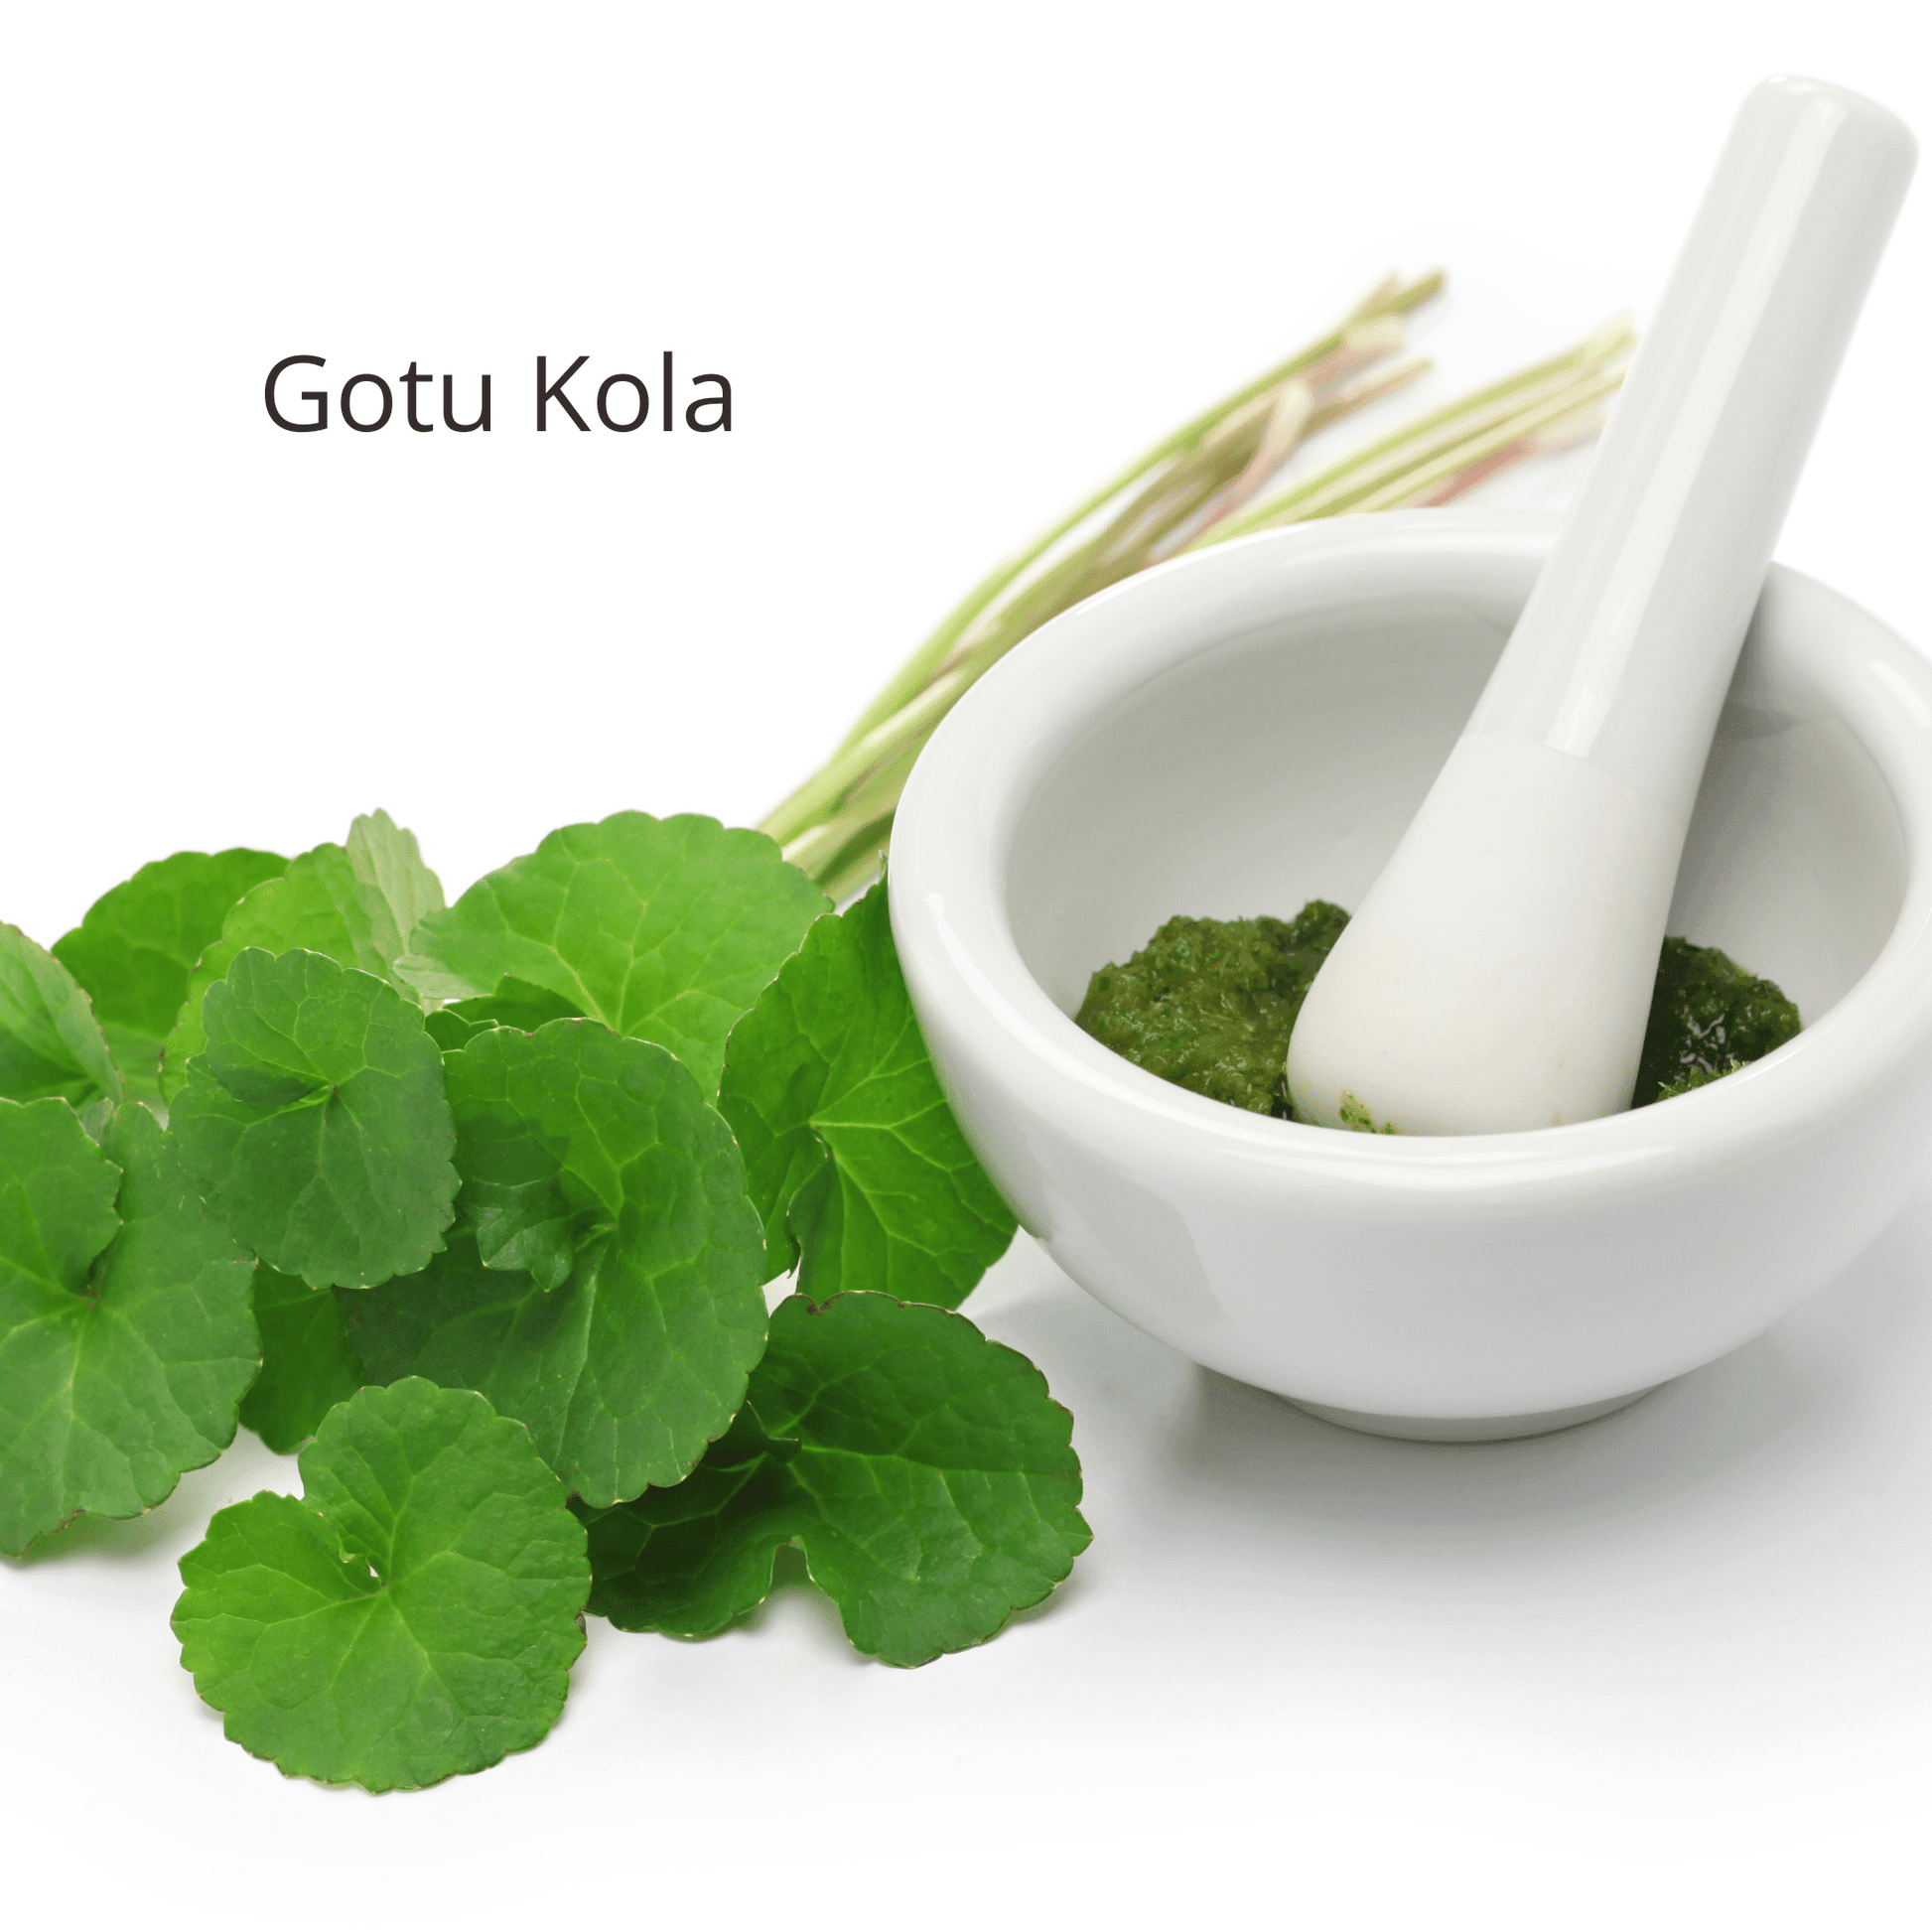 Be Green Bath and Body Toners Pomegranate + White Tea Toner contains gotu kola extract